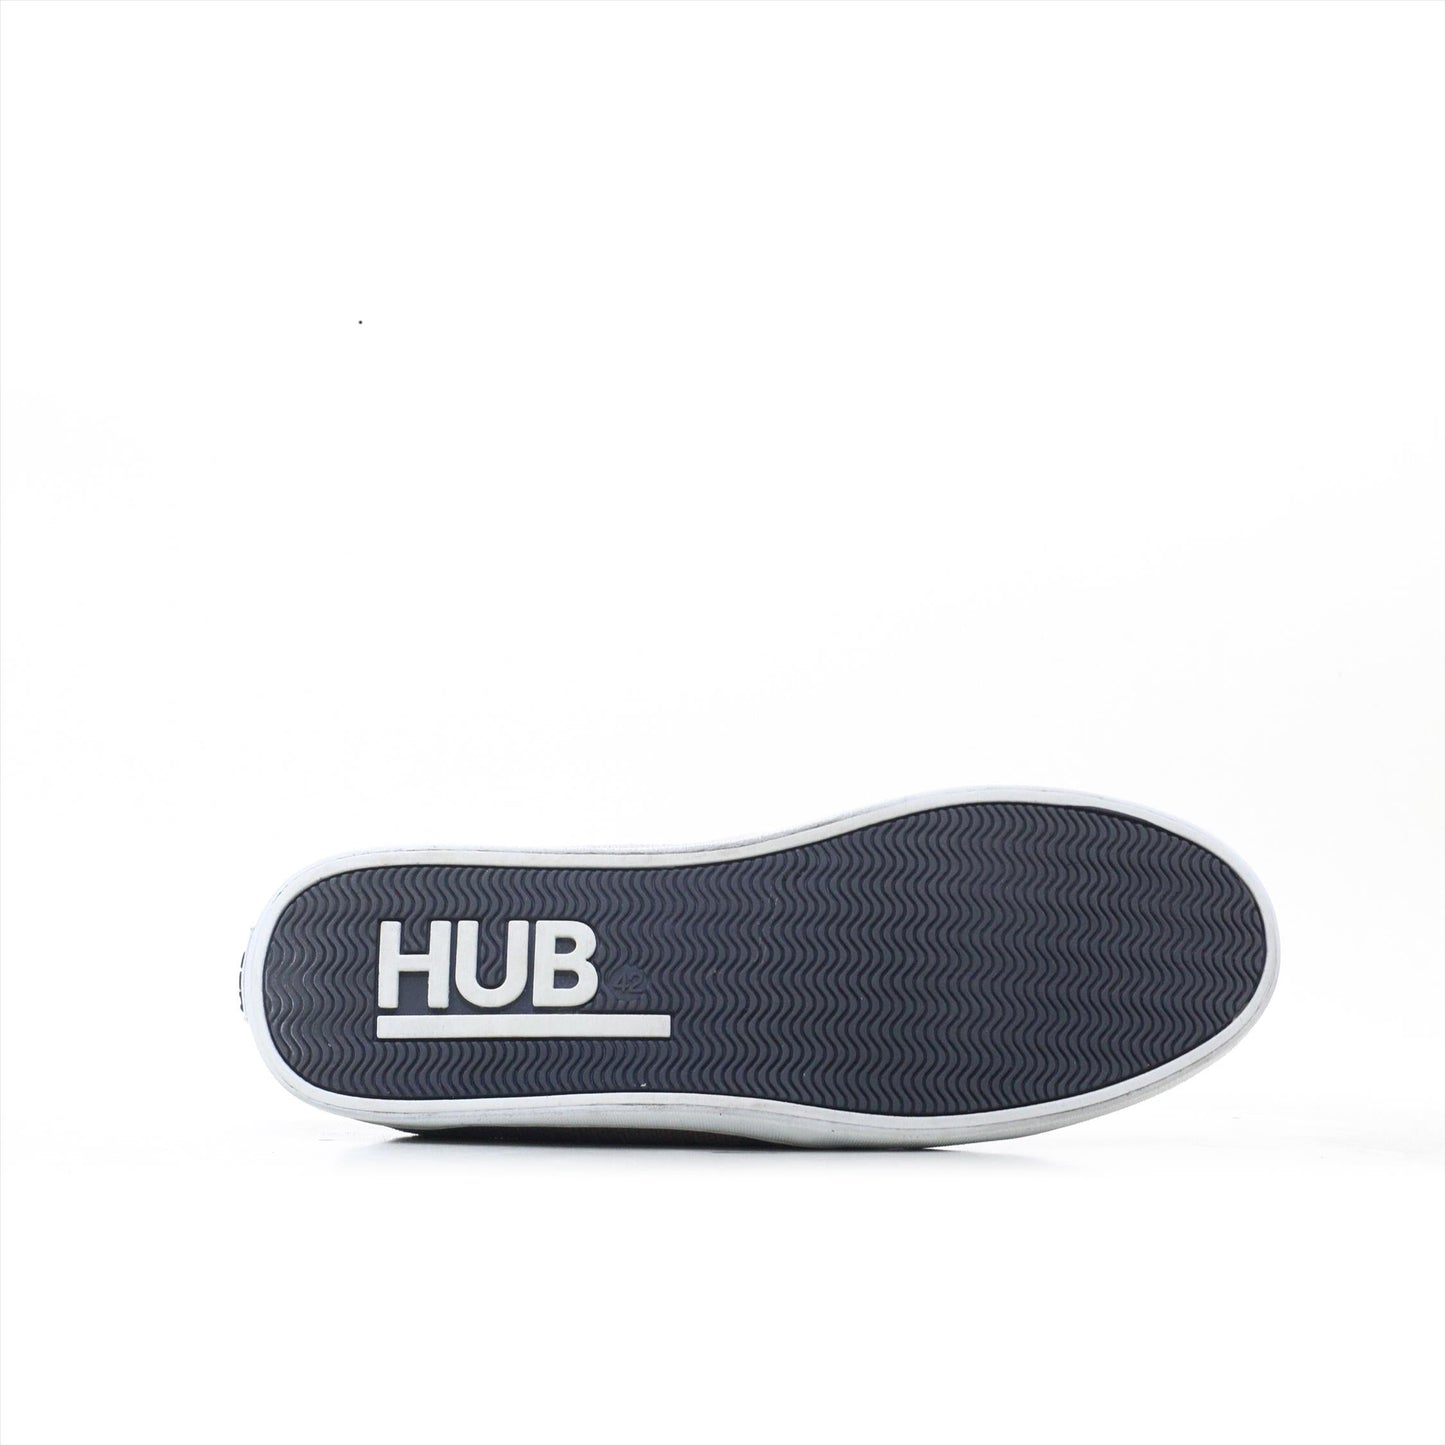 HUB FOOTWEAR (Original USA Imported)